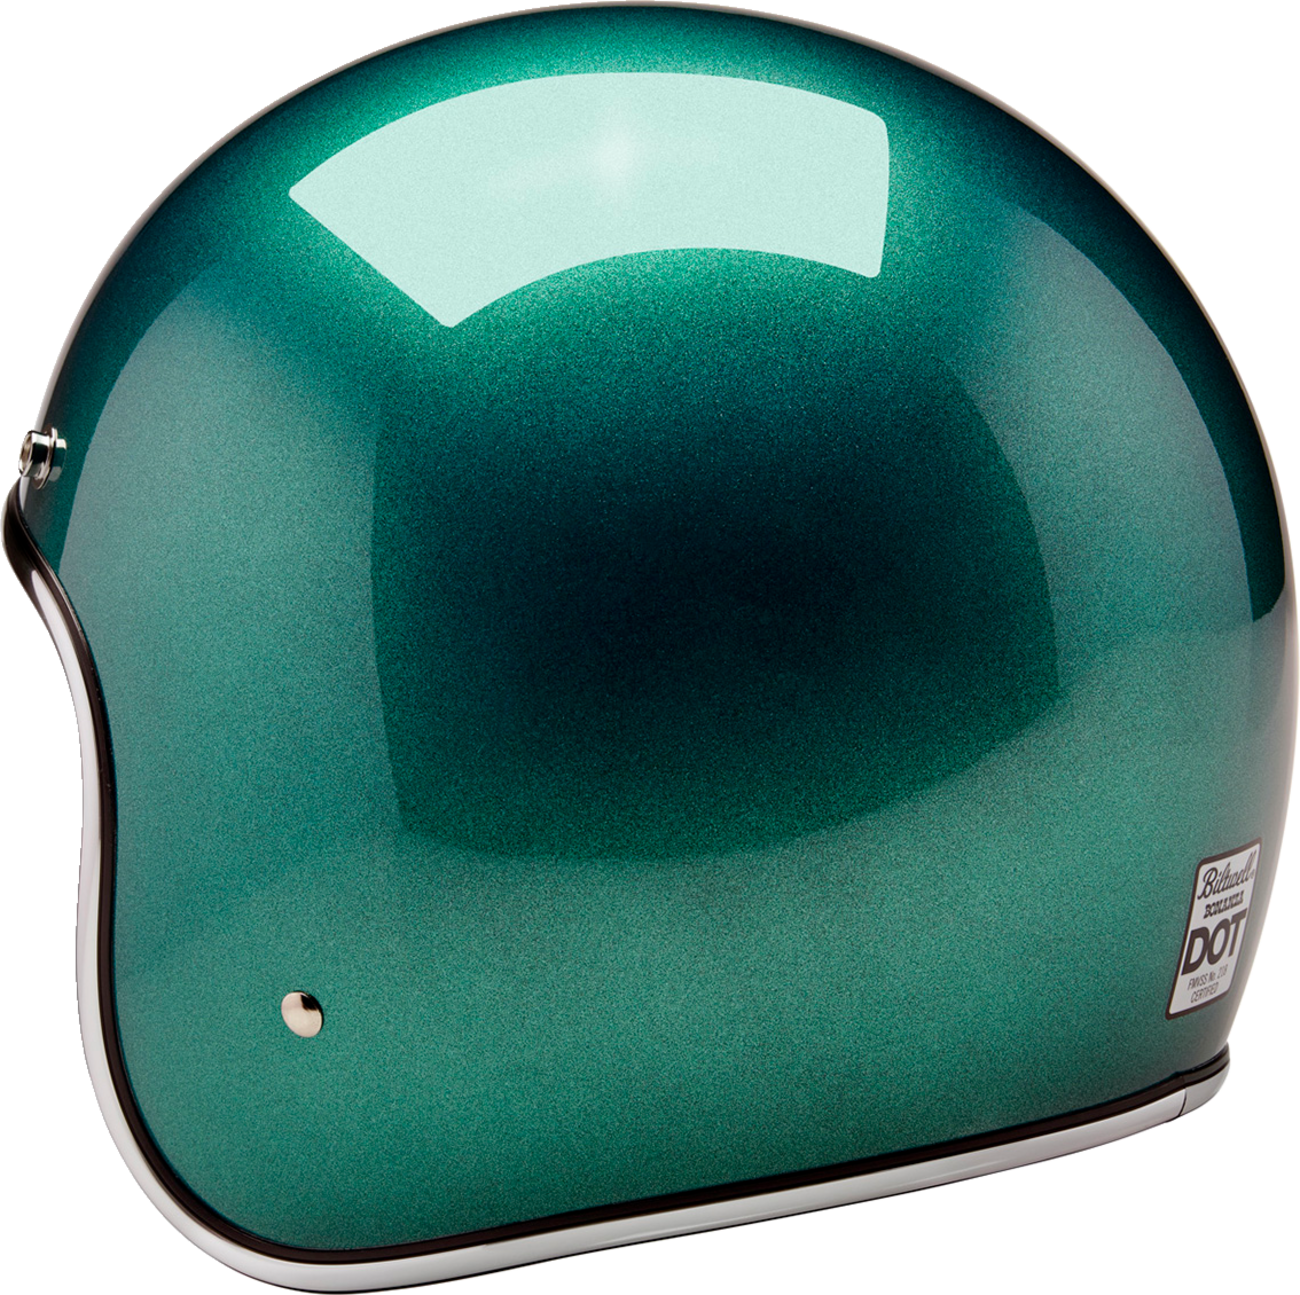 BILTWELL Bonanza Helmet - Metallic Catalina Green - Medium 1001-358-203